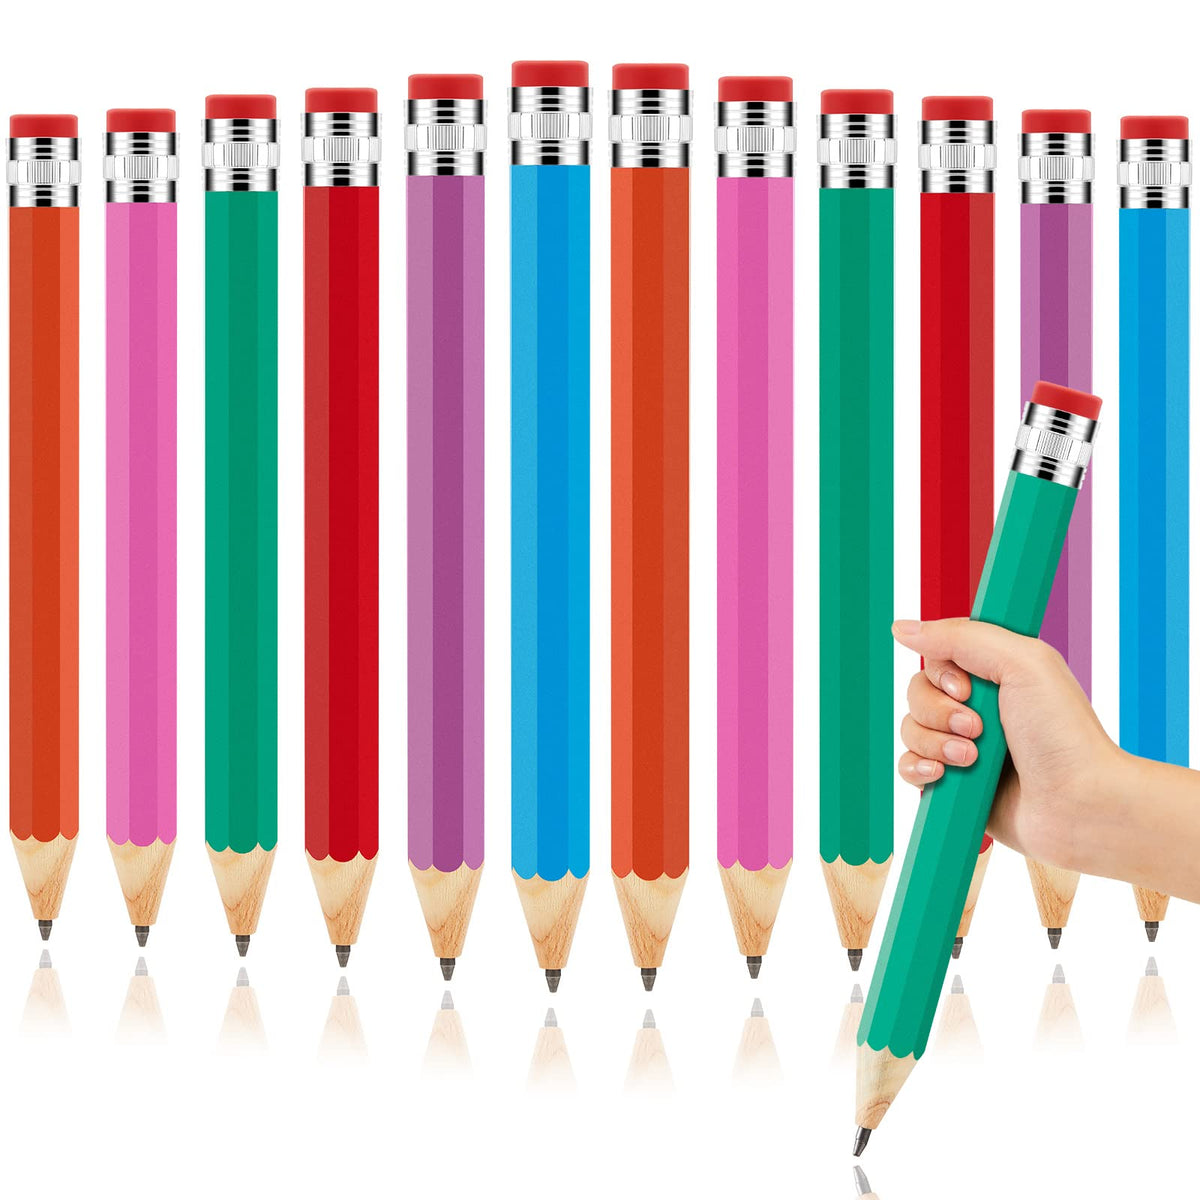 GENERAL PENCIL Assorted Colors MultiPastel (R) Chalk Pencils Pkg, 36 Count  (Pack of 1)